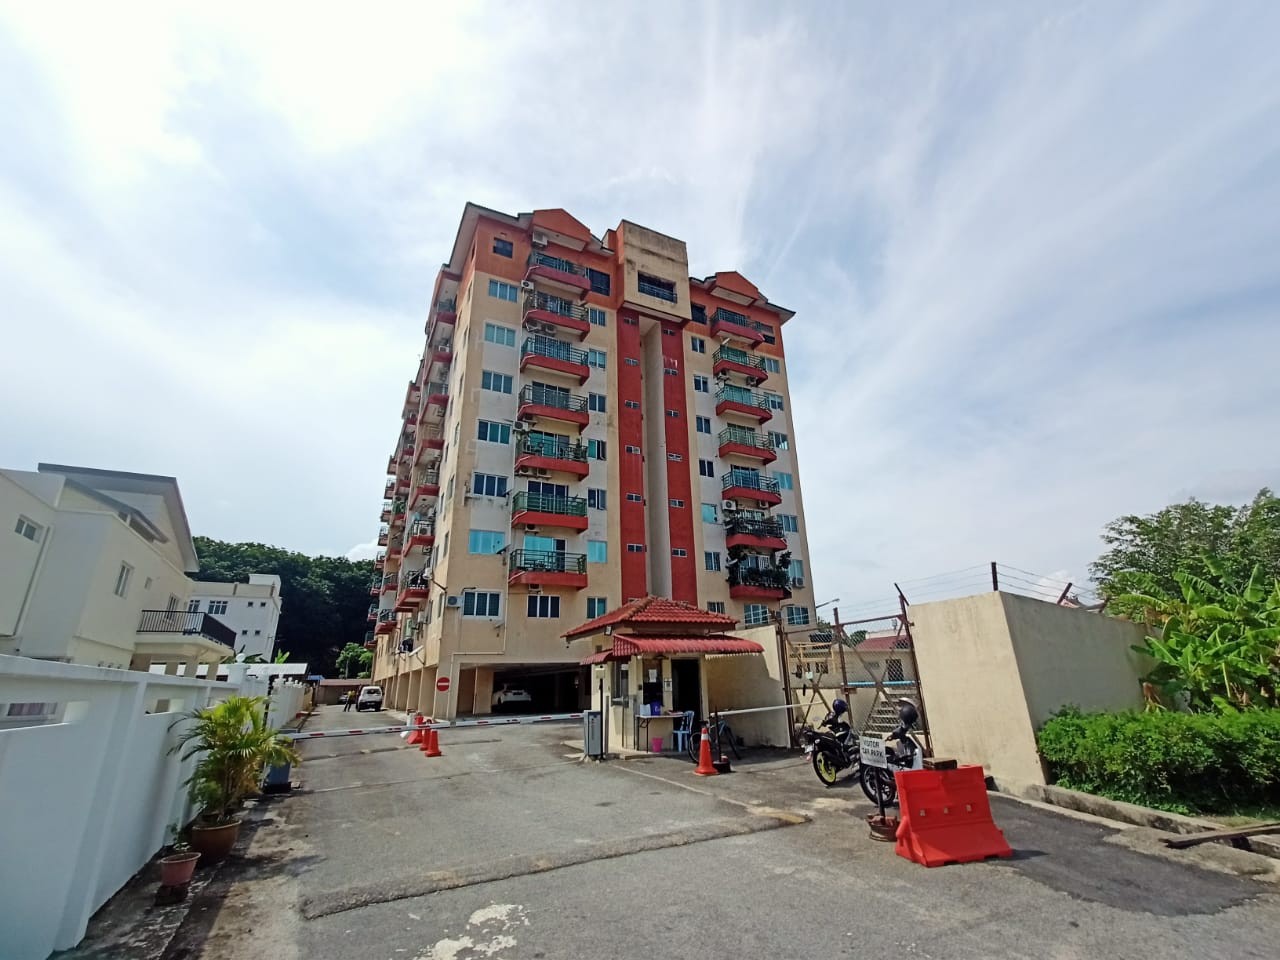 Lasksamana Cheng Ho 2 Apartment, Gated Garded Corner Lot, Bandar Hilir Bukit Cina Melaka For Rent RM1100 (CHAN 0105280170)